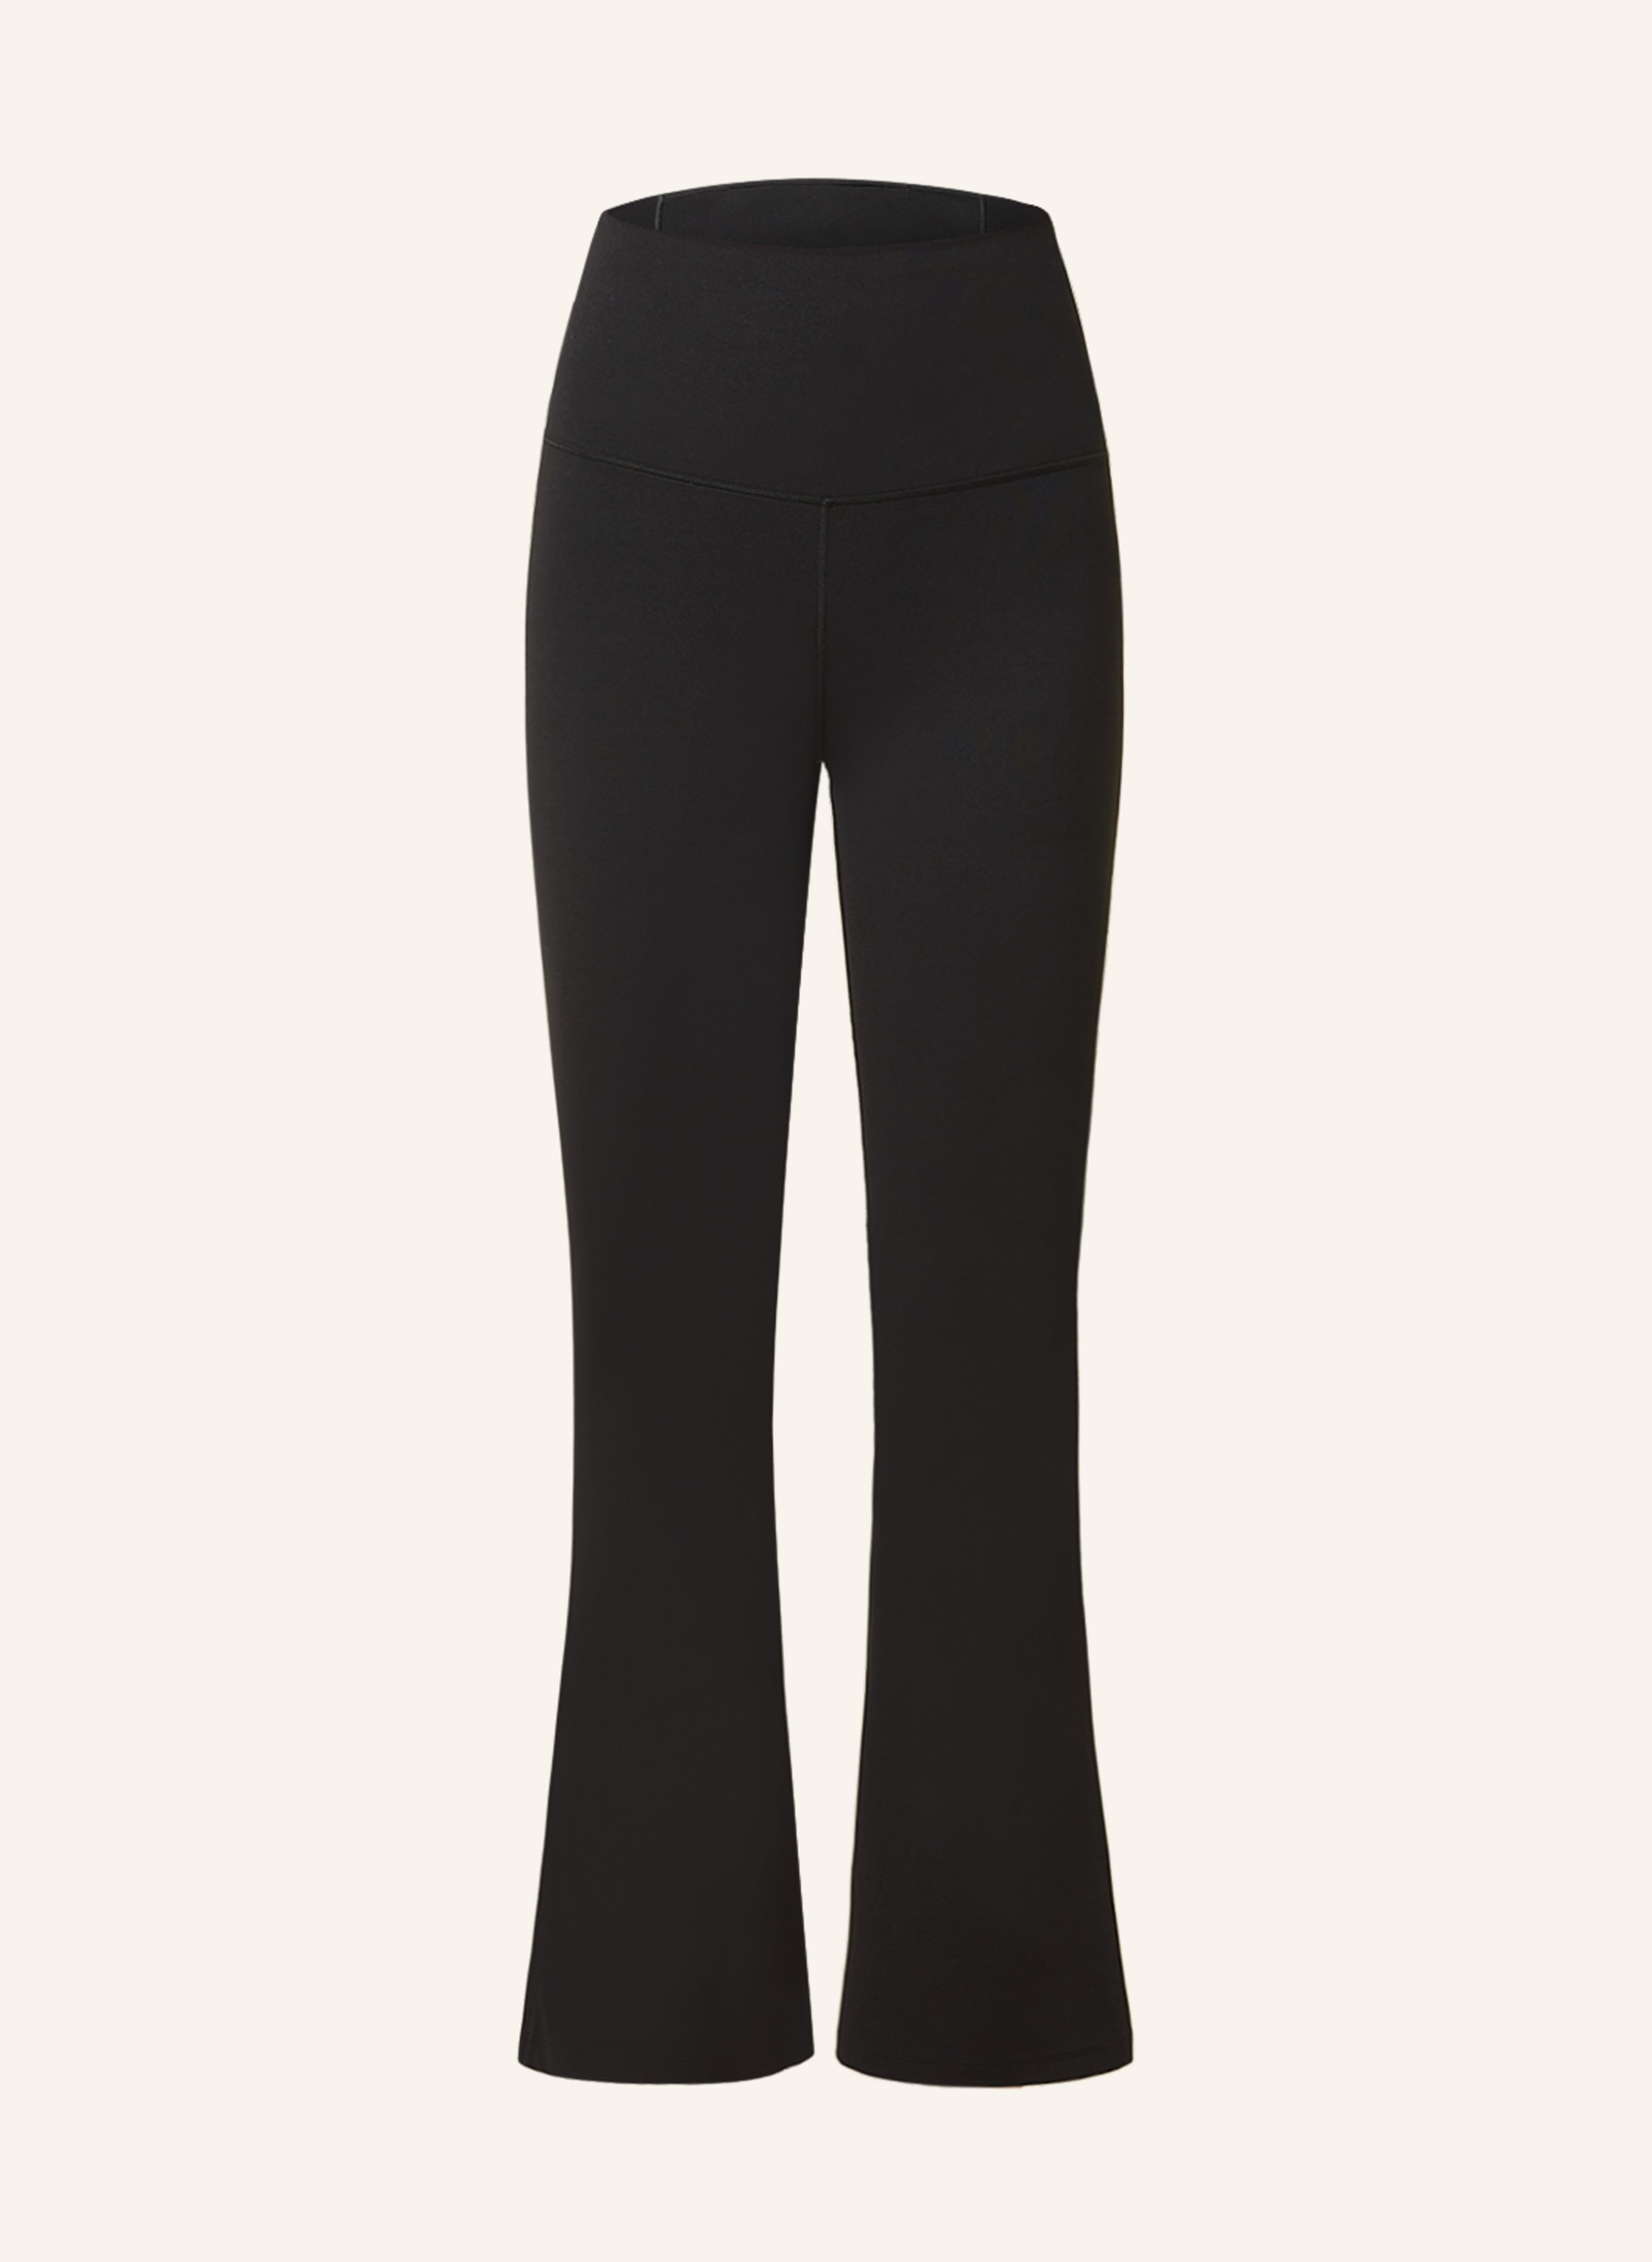 NIKE LEGEND CLASSIC Dri-Fit Trousers Yoga Wide Leg Boot Cut Pants Black  Size L £16.00 - PicClick UK